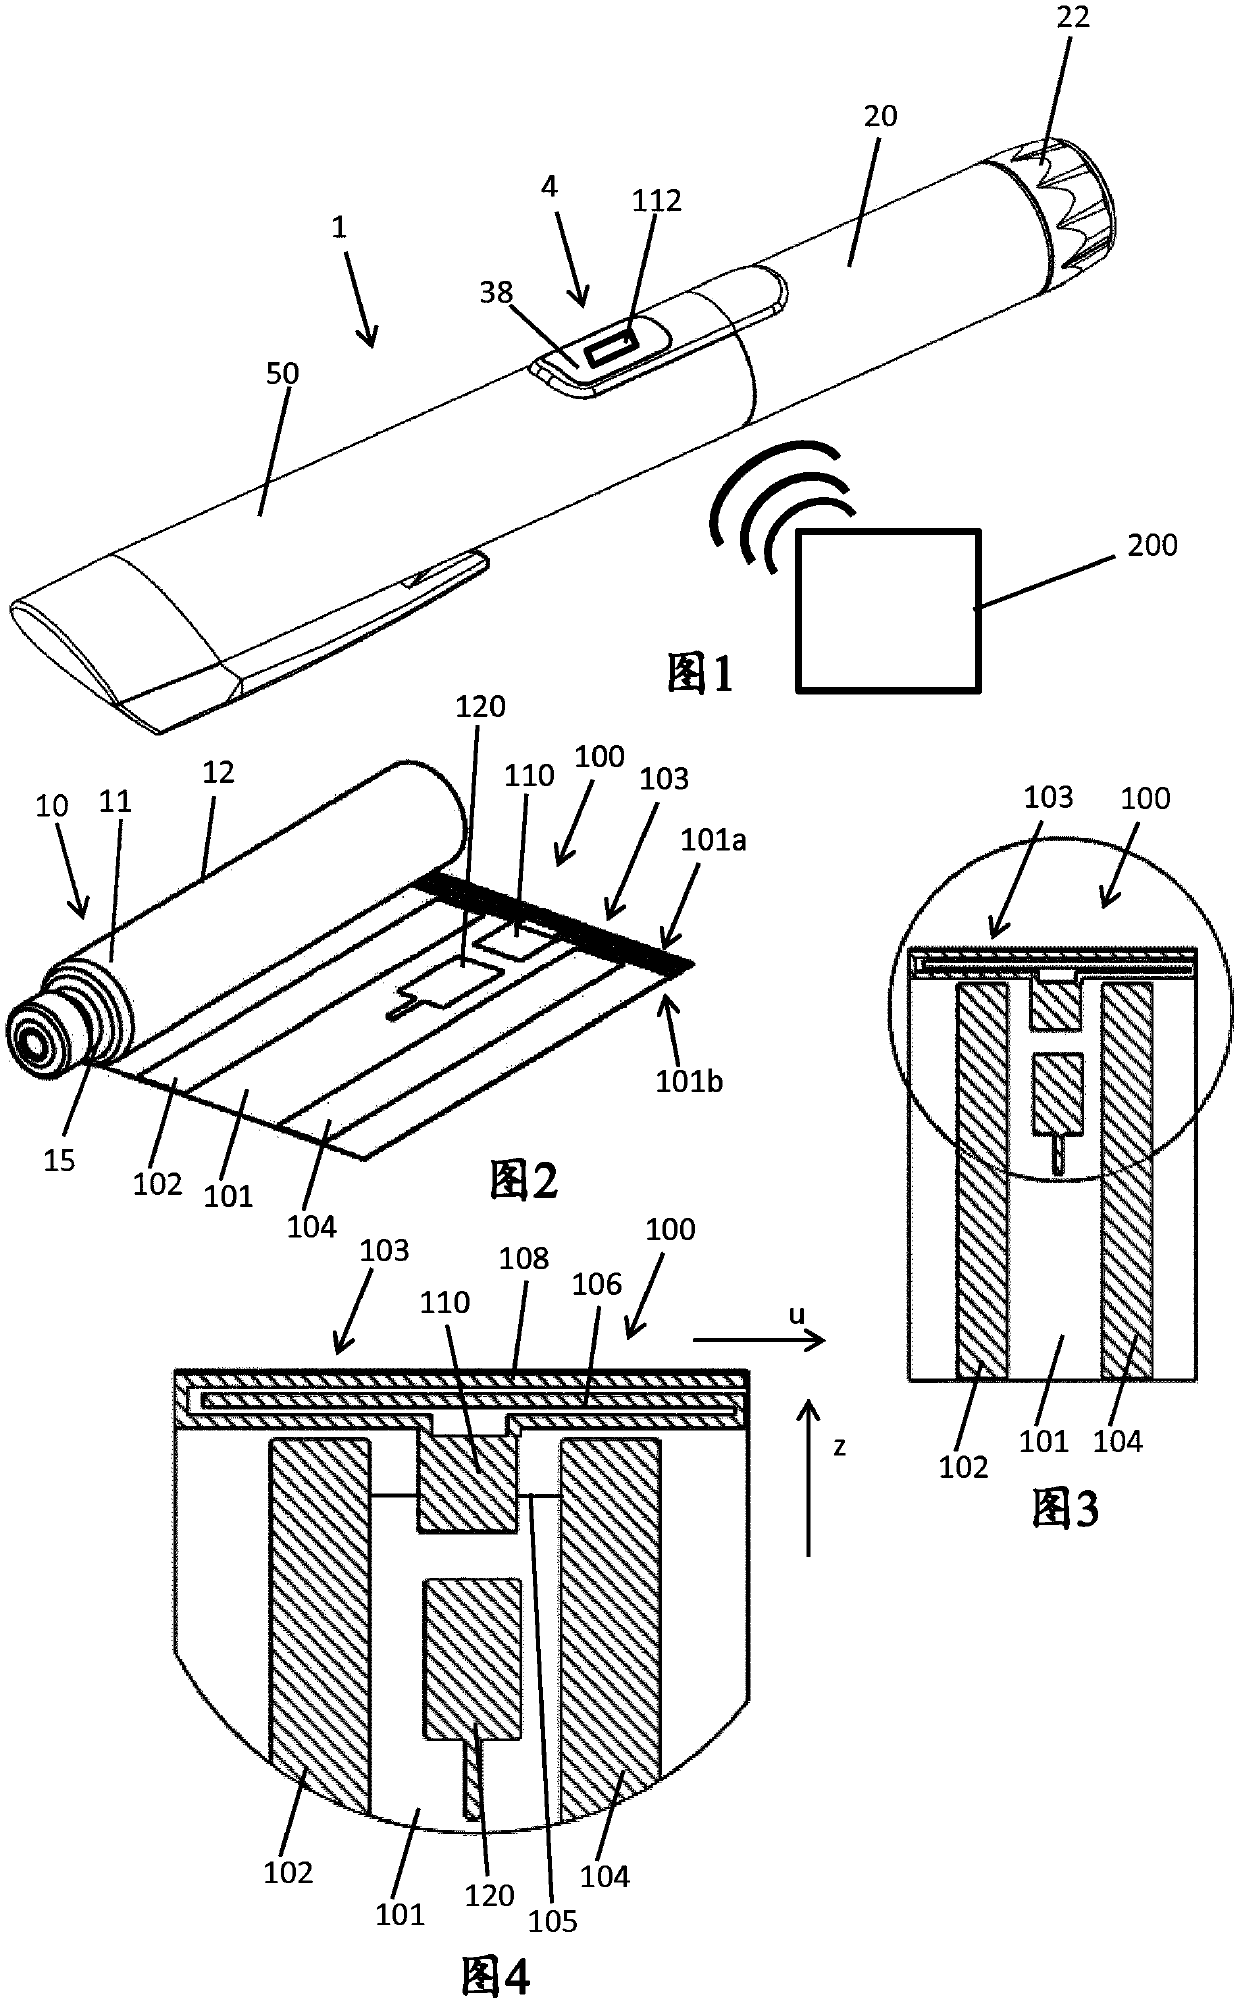 Sensor, cartridge and drug delivery device